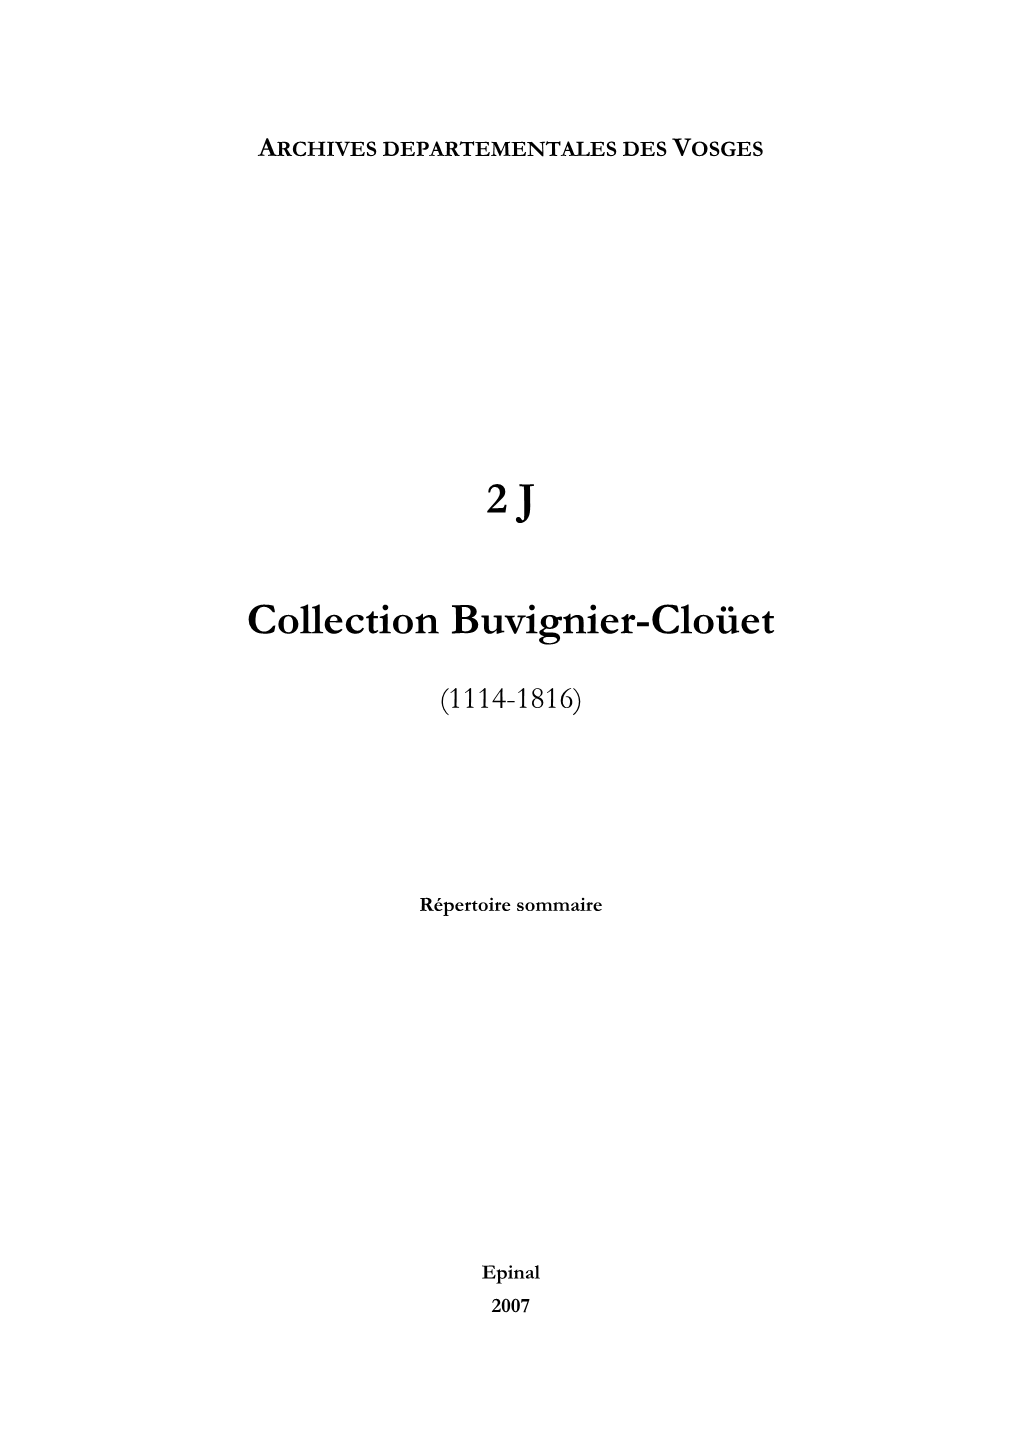 2 J Collection Buvignier-Cloüet